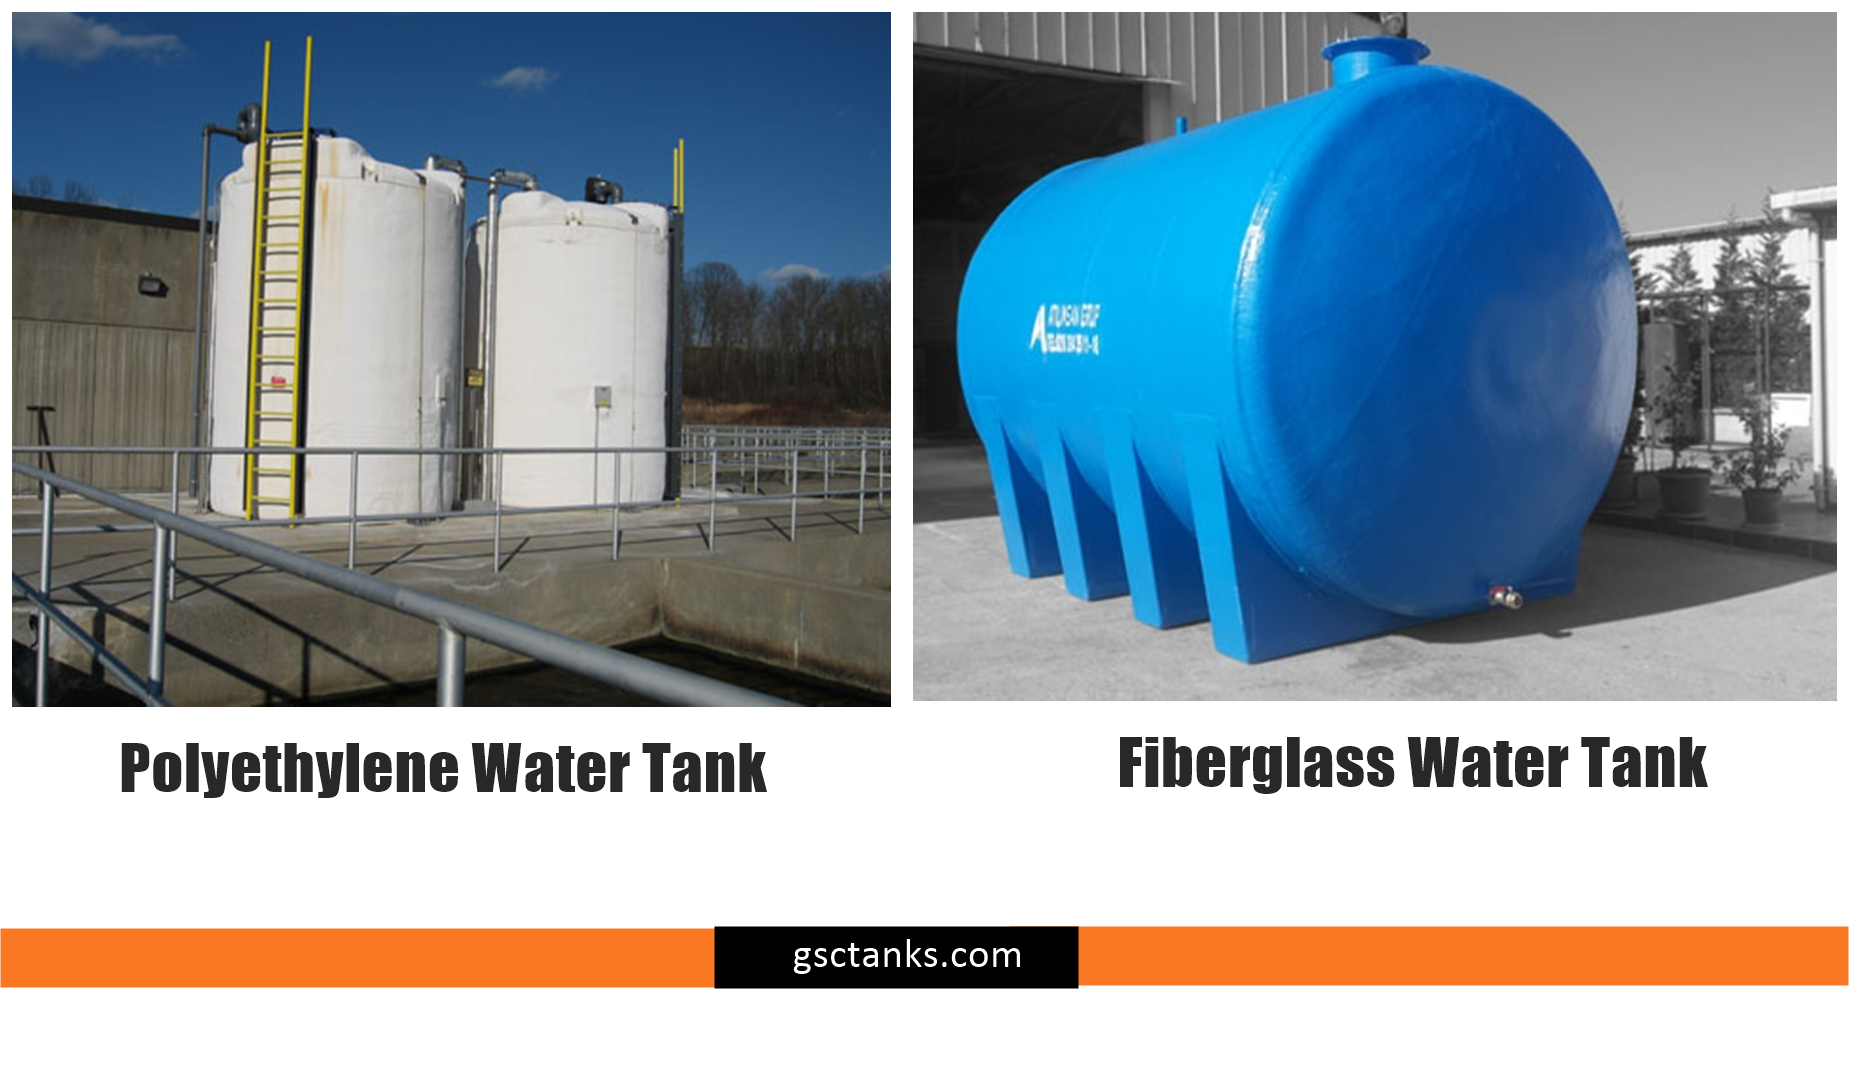 How Fiberglass and Polyethylene Water Tanks Differ